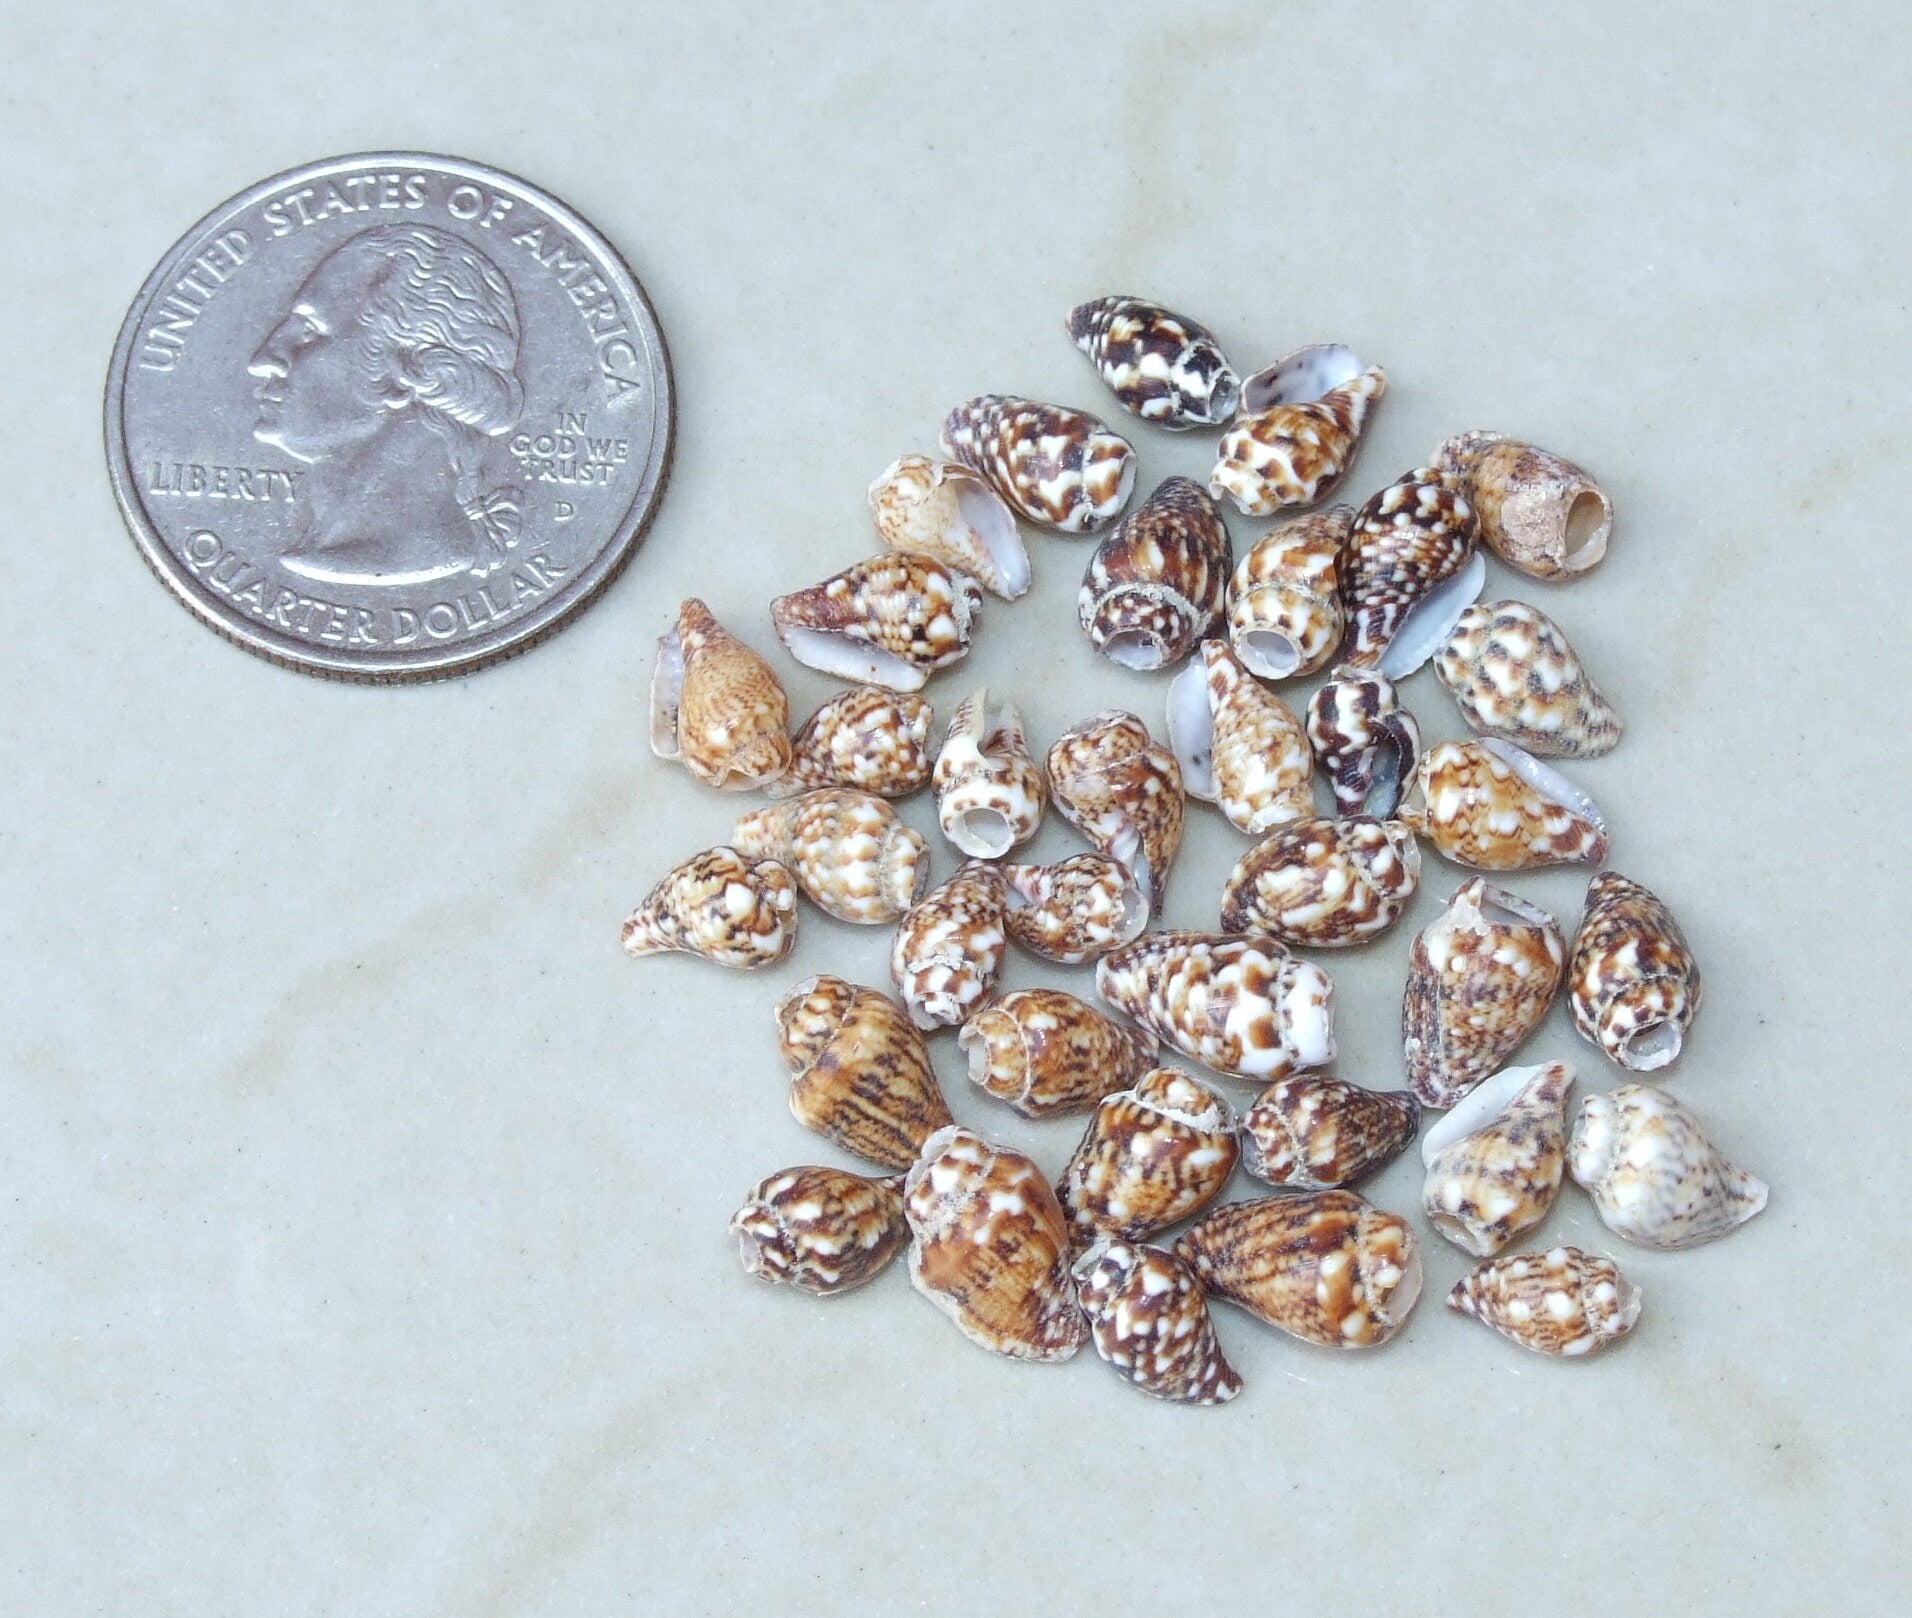 100 pcs Tiny Spiral Shells Black Spotted Seashells For Crafts Art Decor 1-2  cm